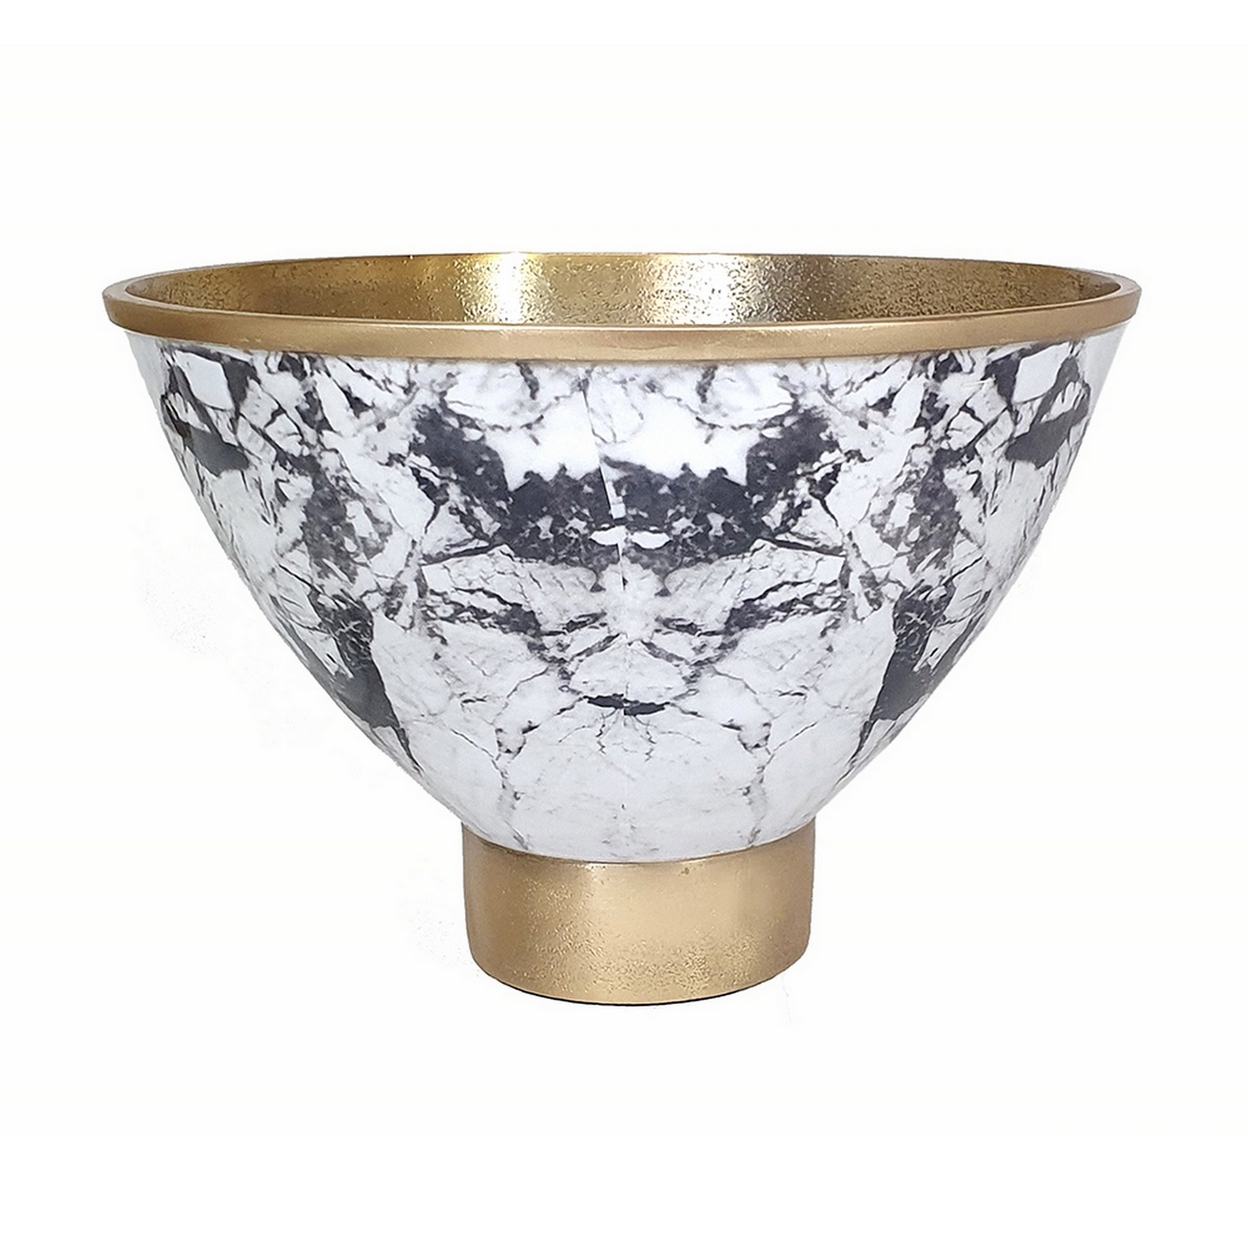 Sinzo 10 Inch Tapered Bowl, Gold Aluminum, Textured Design, Black, White - Saltoro Sherpi